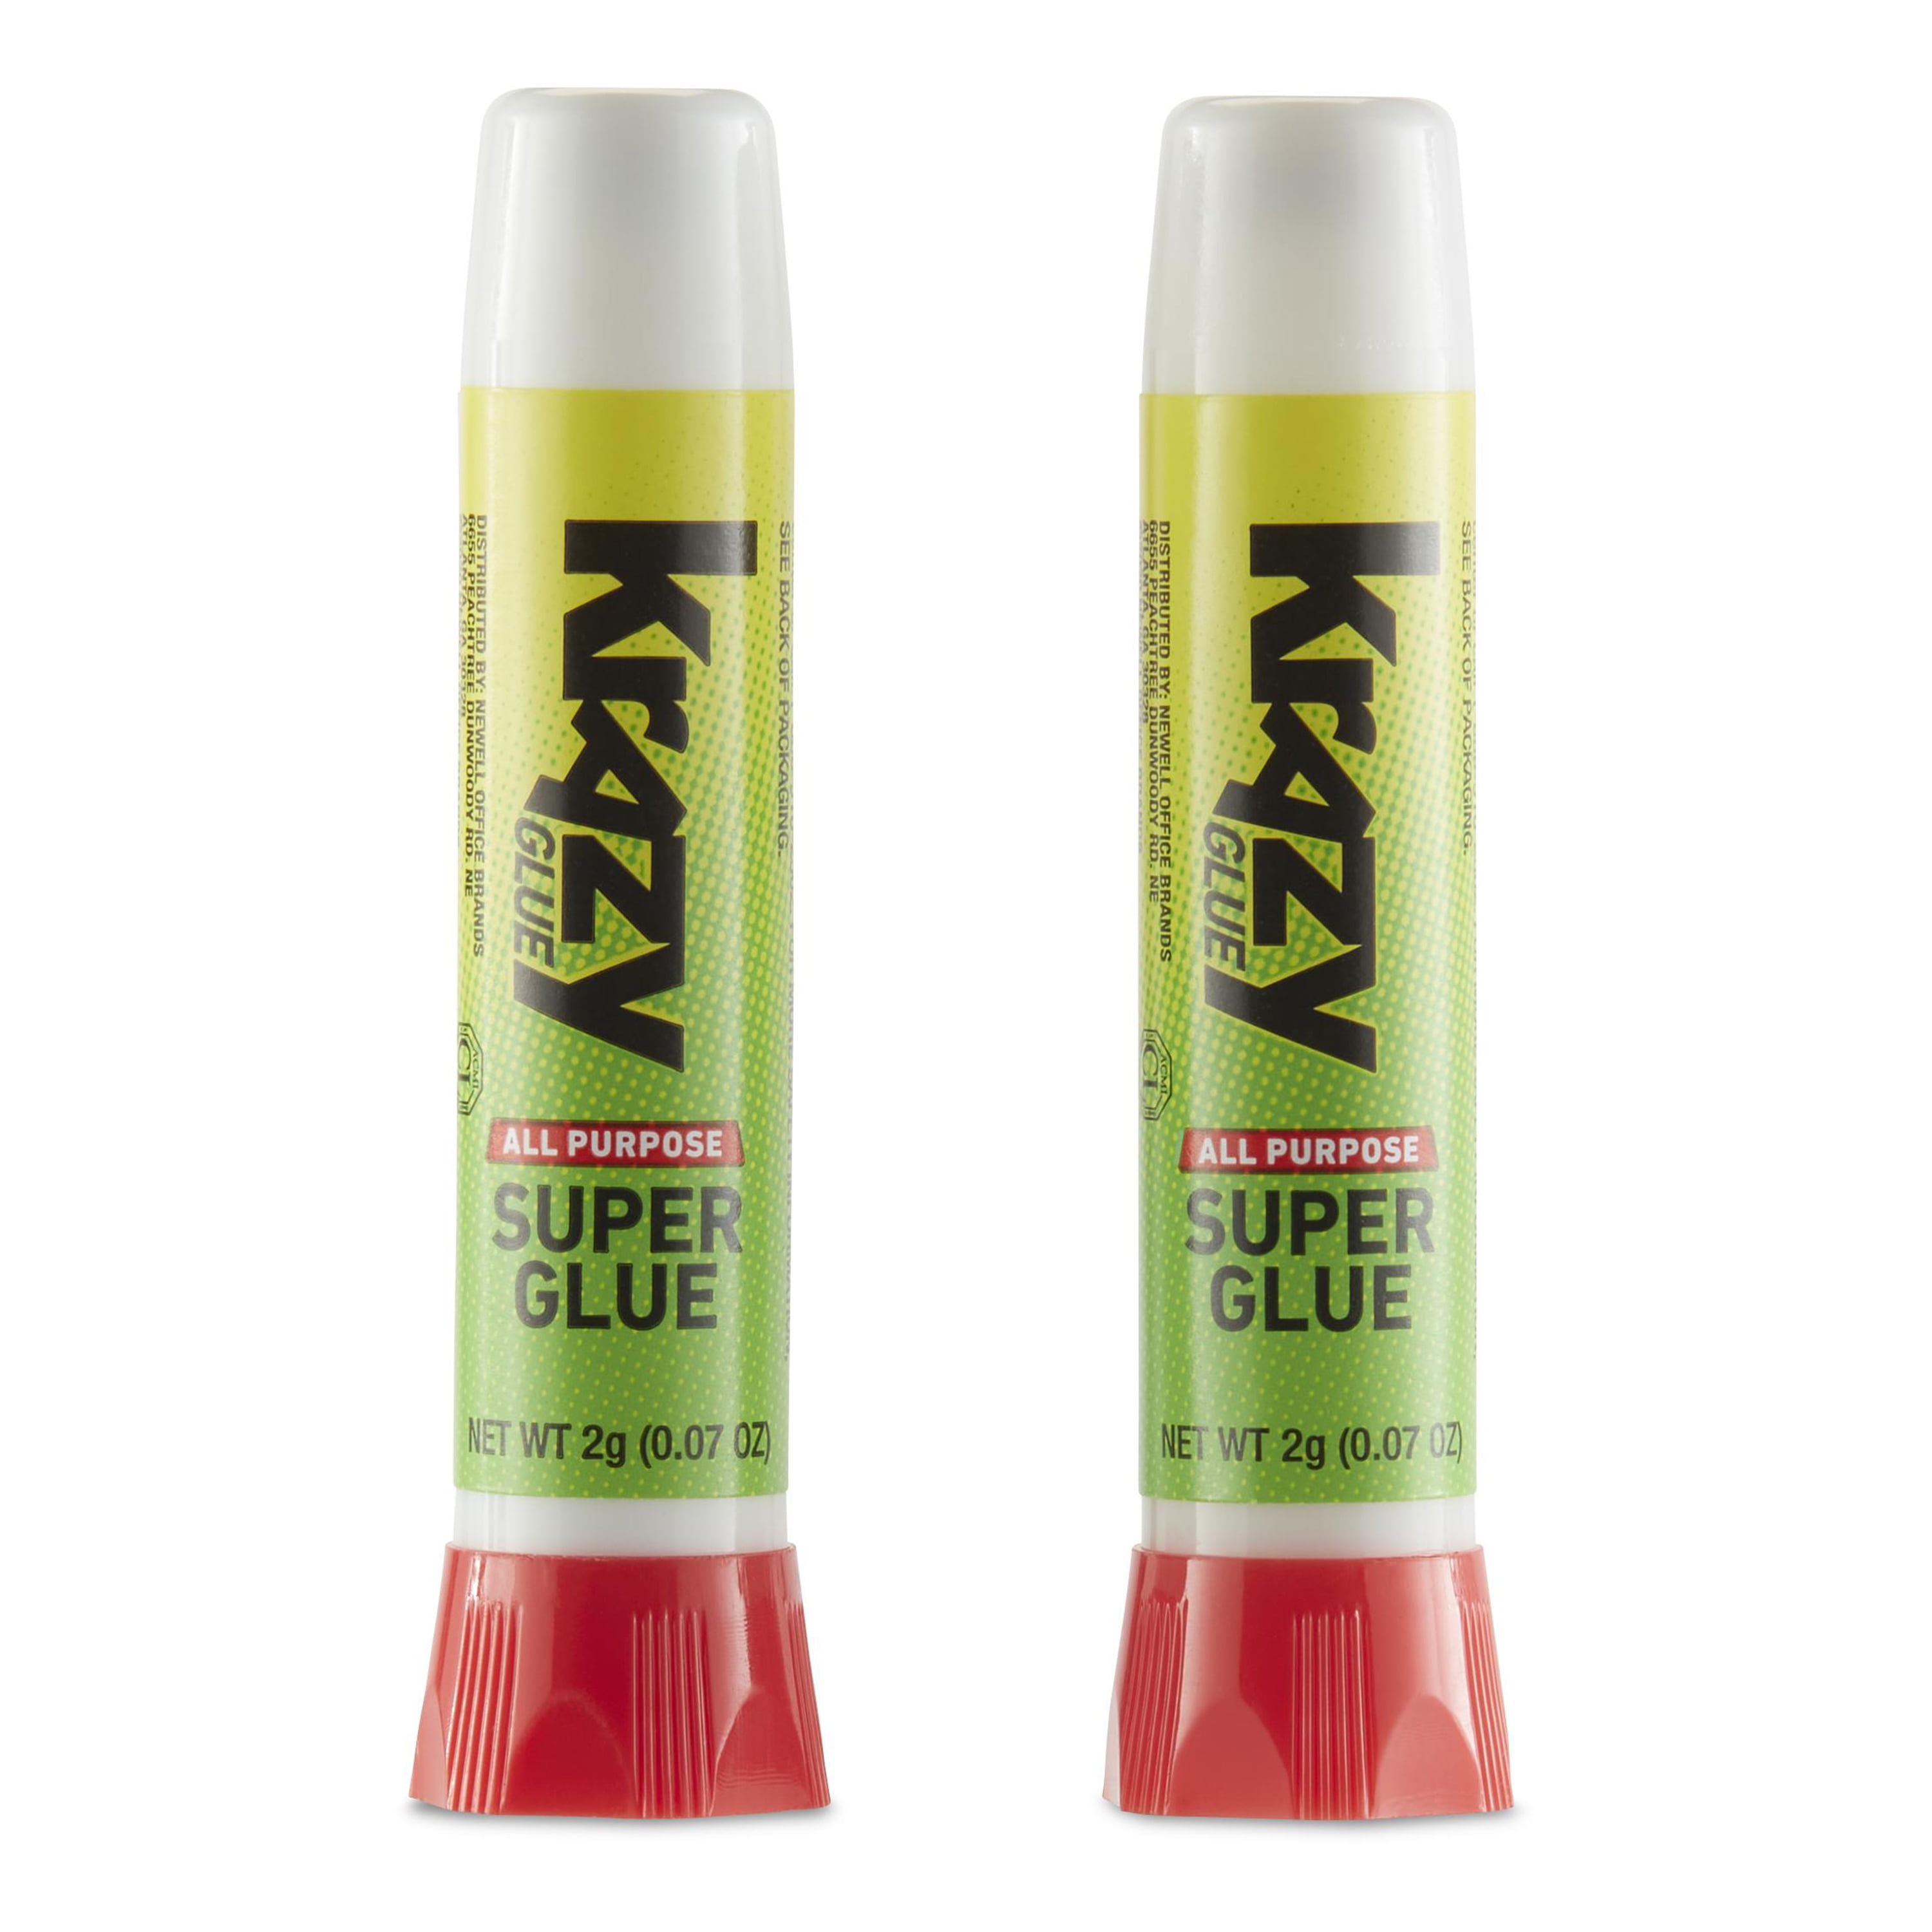 2 gm Krazy Glue All Purpose Instant Glue Gel